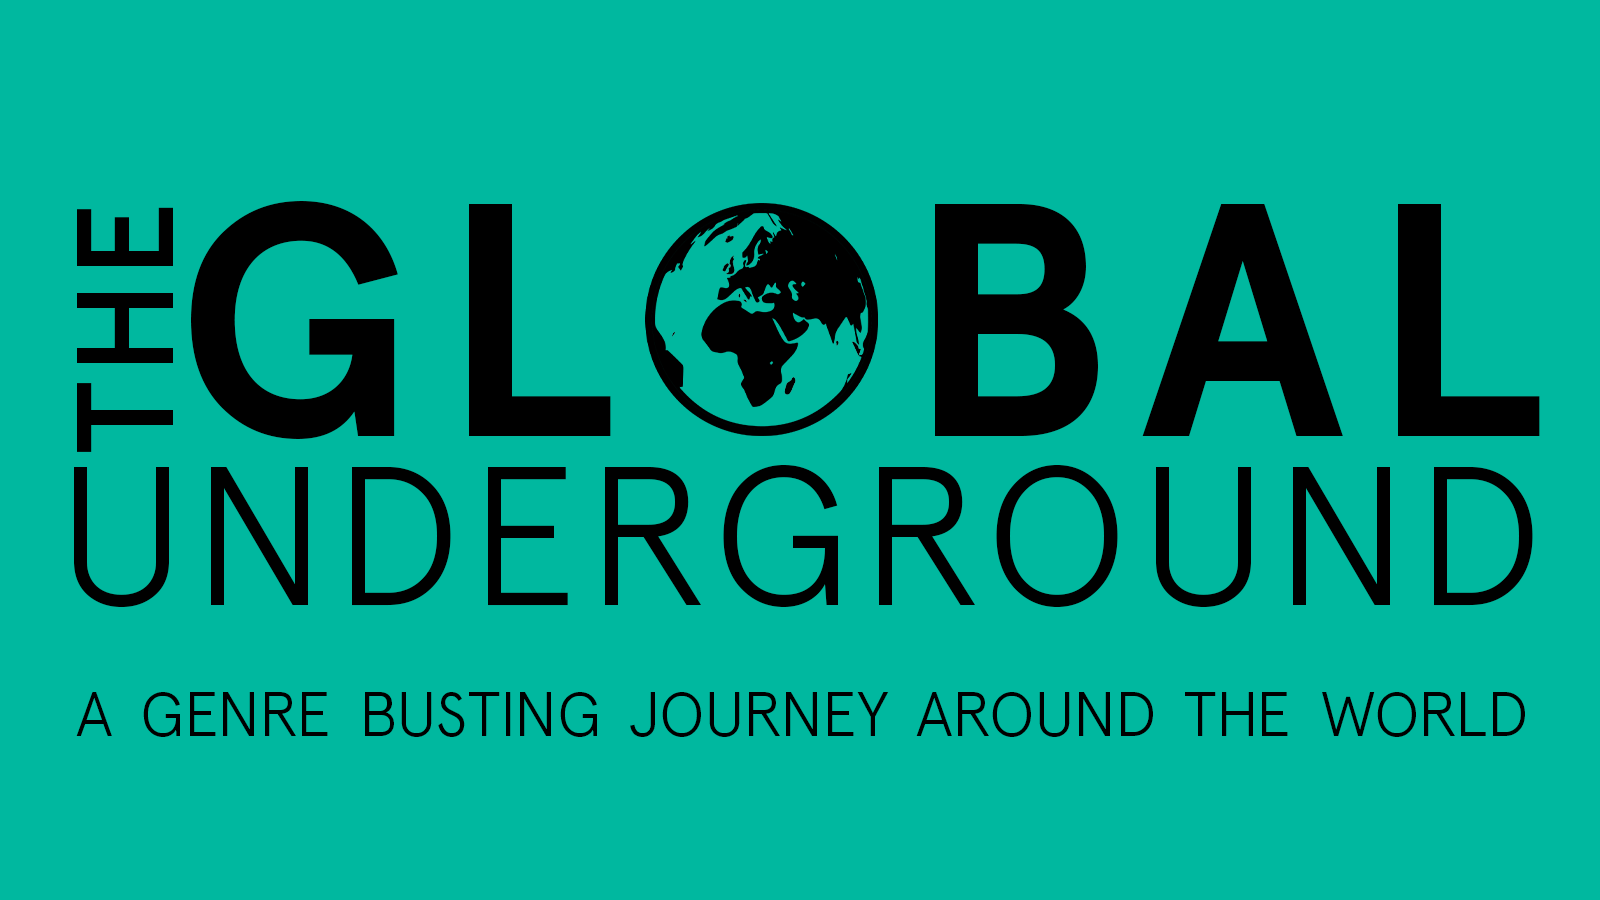 The Global Underground